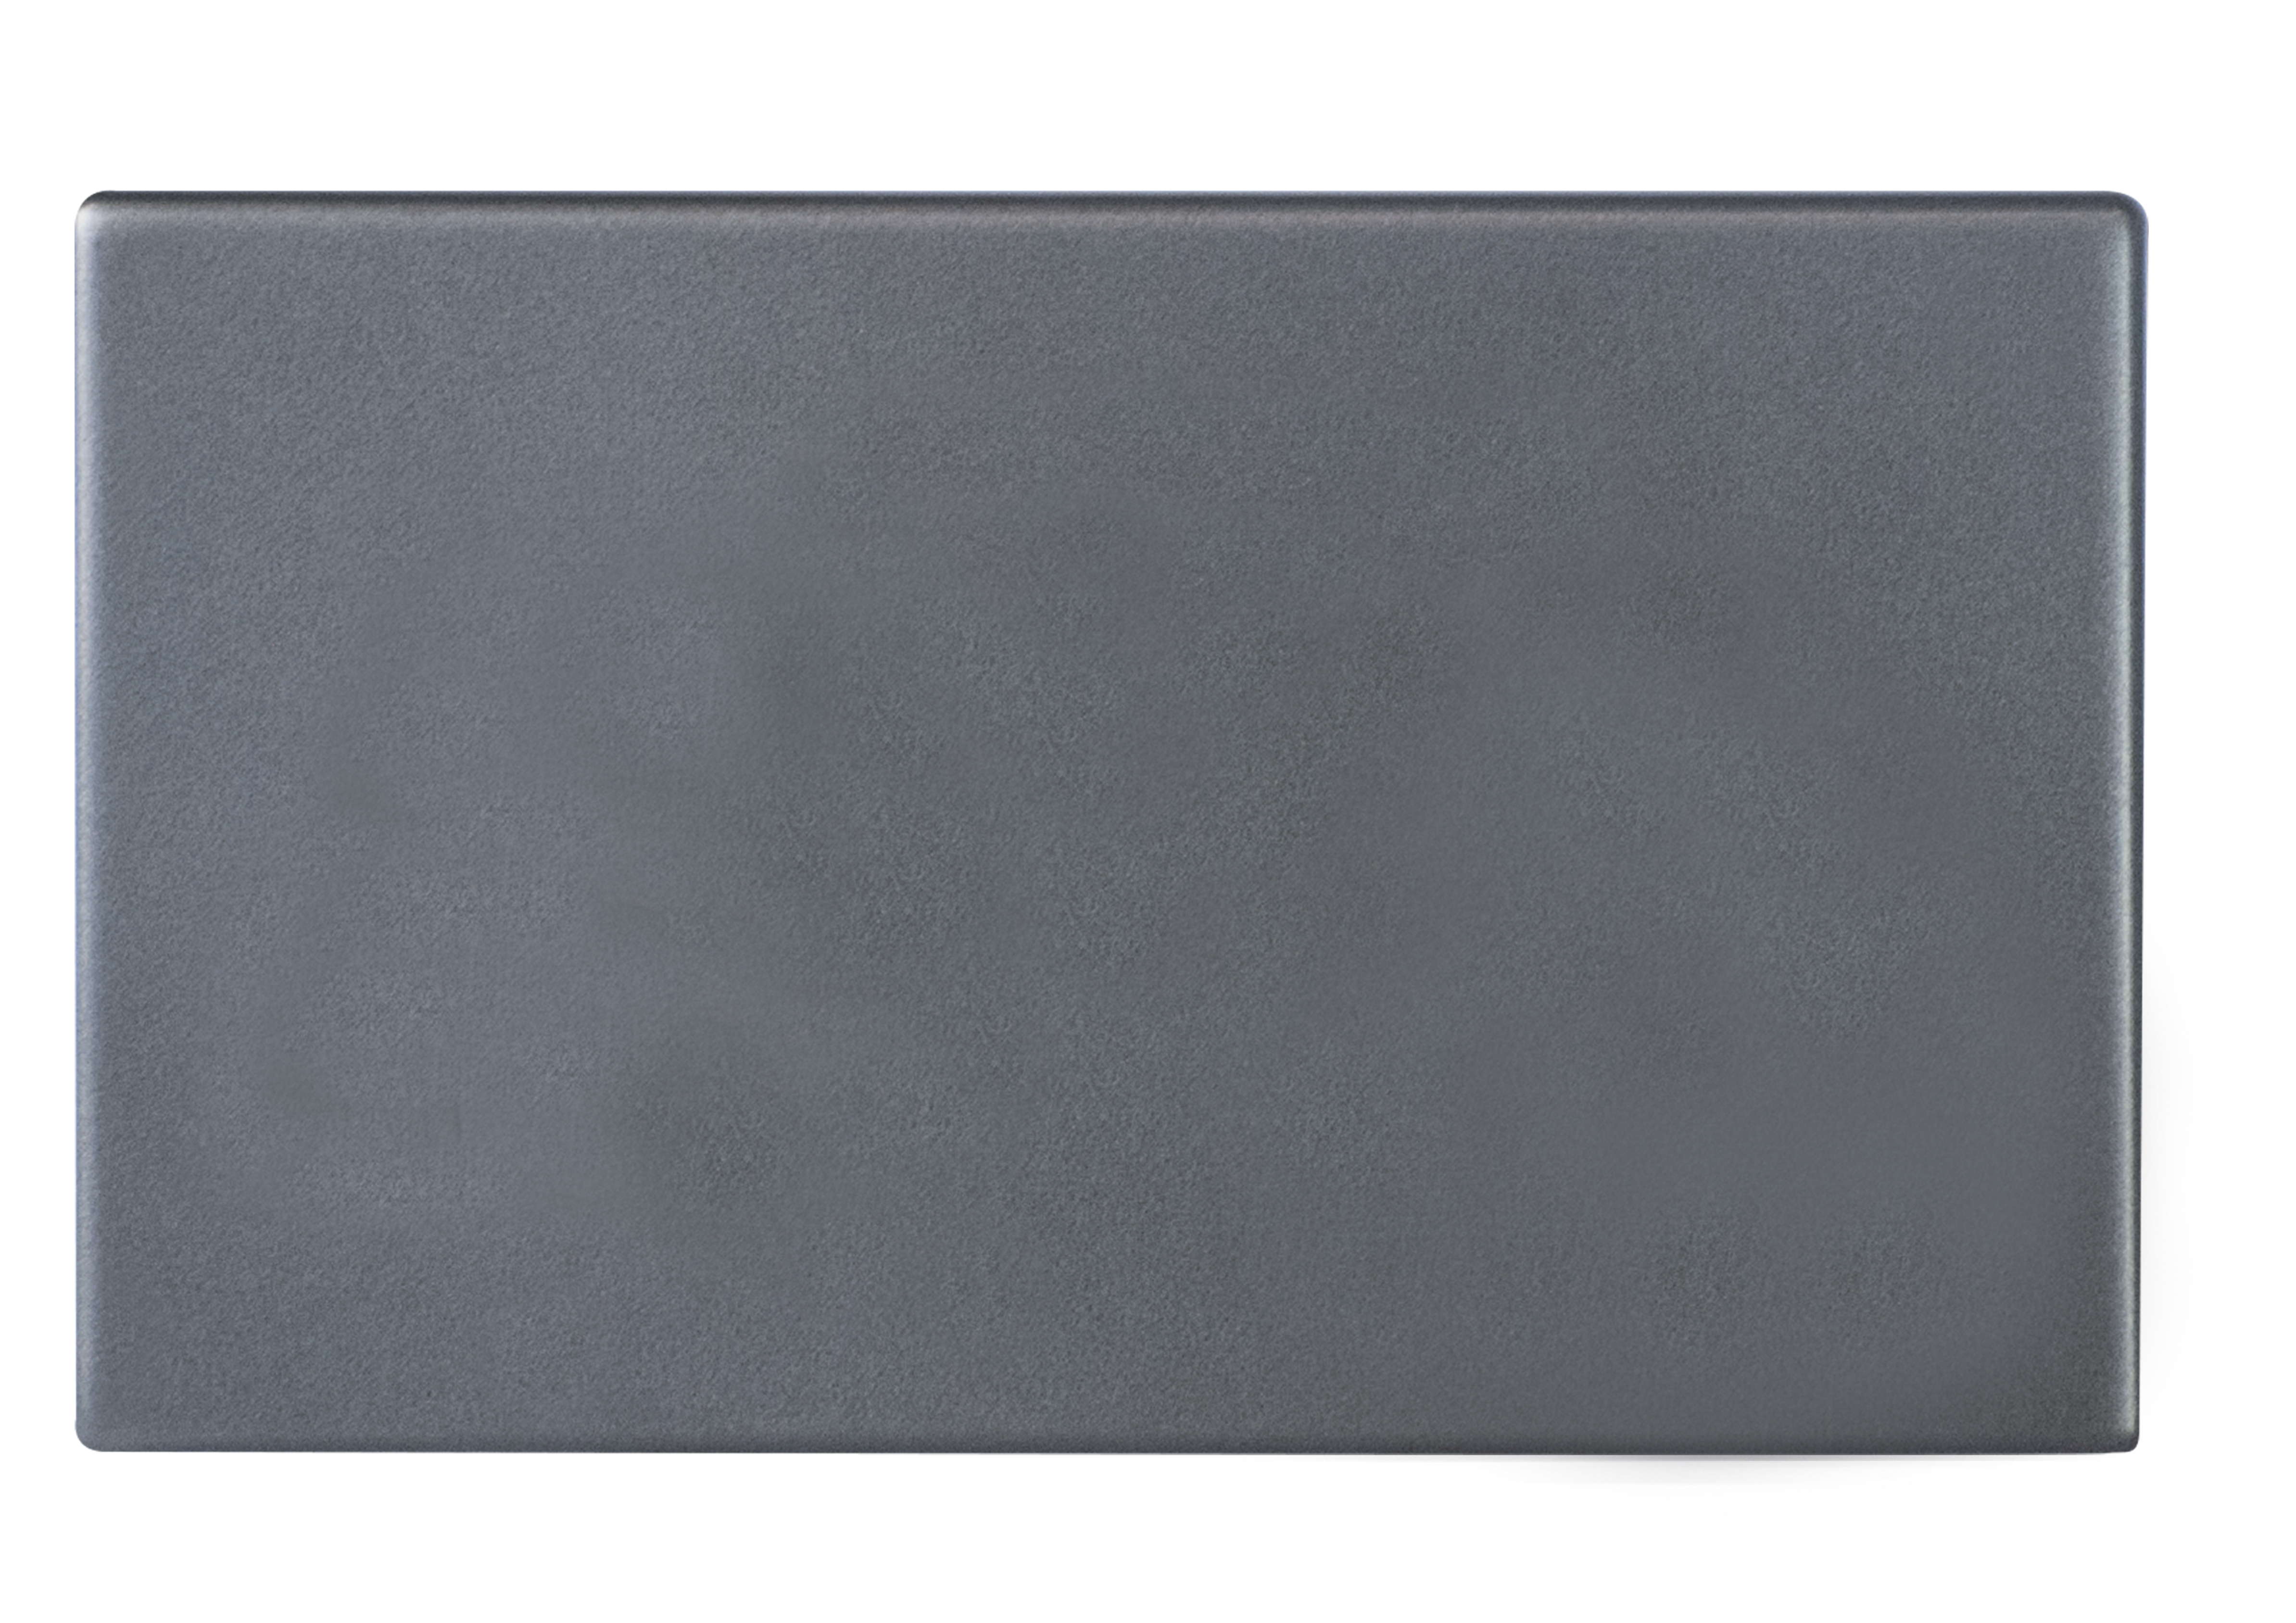 Hamln 7G2ABPD Blank Plate 144.4x87.4mm